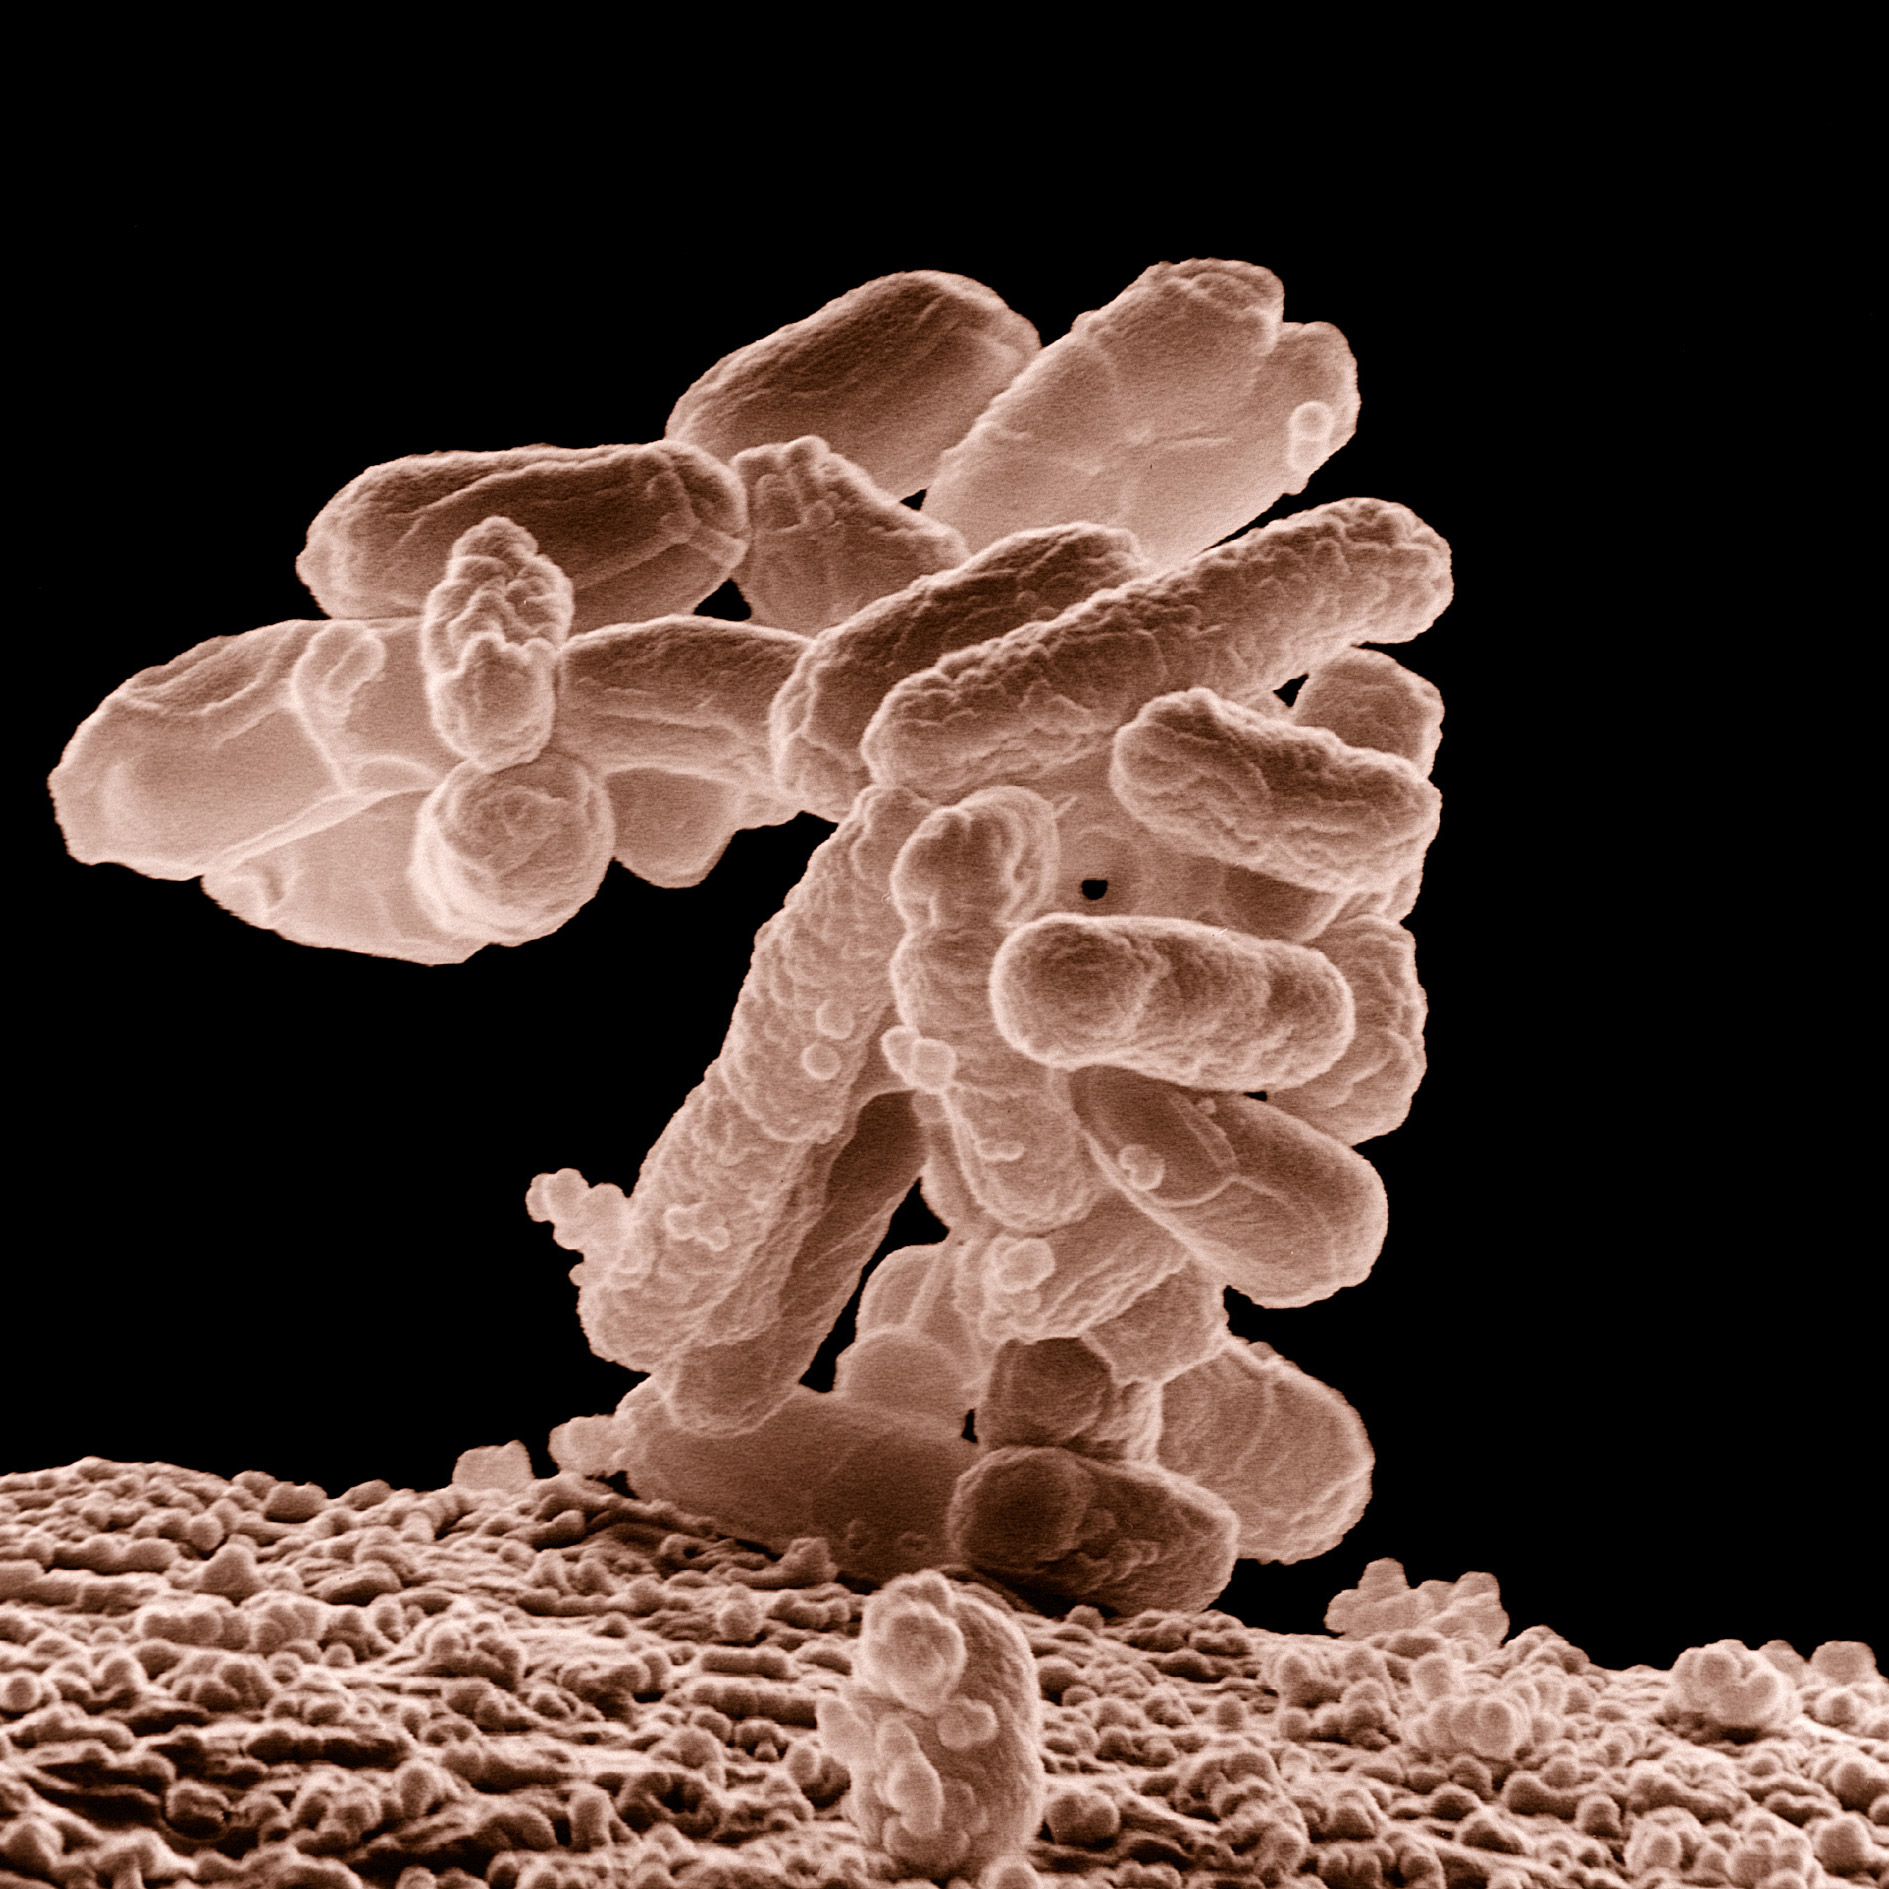 A colony of E. coli.